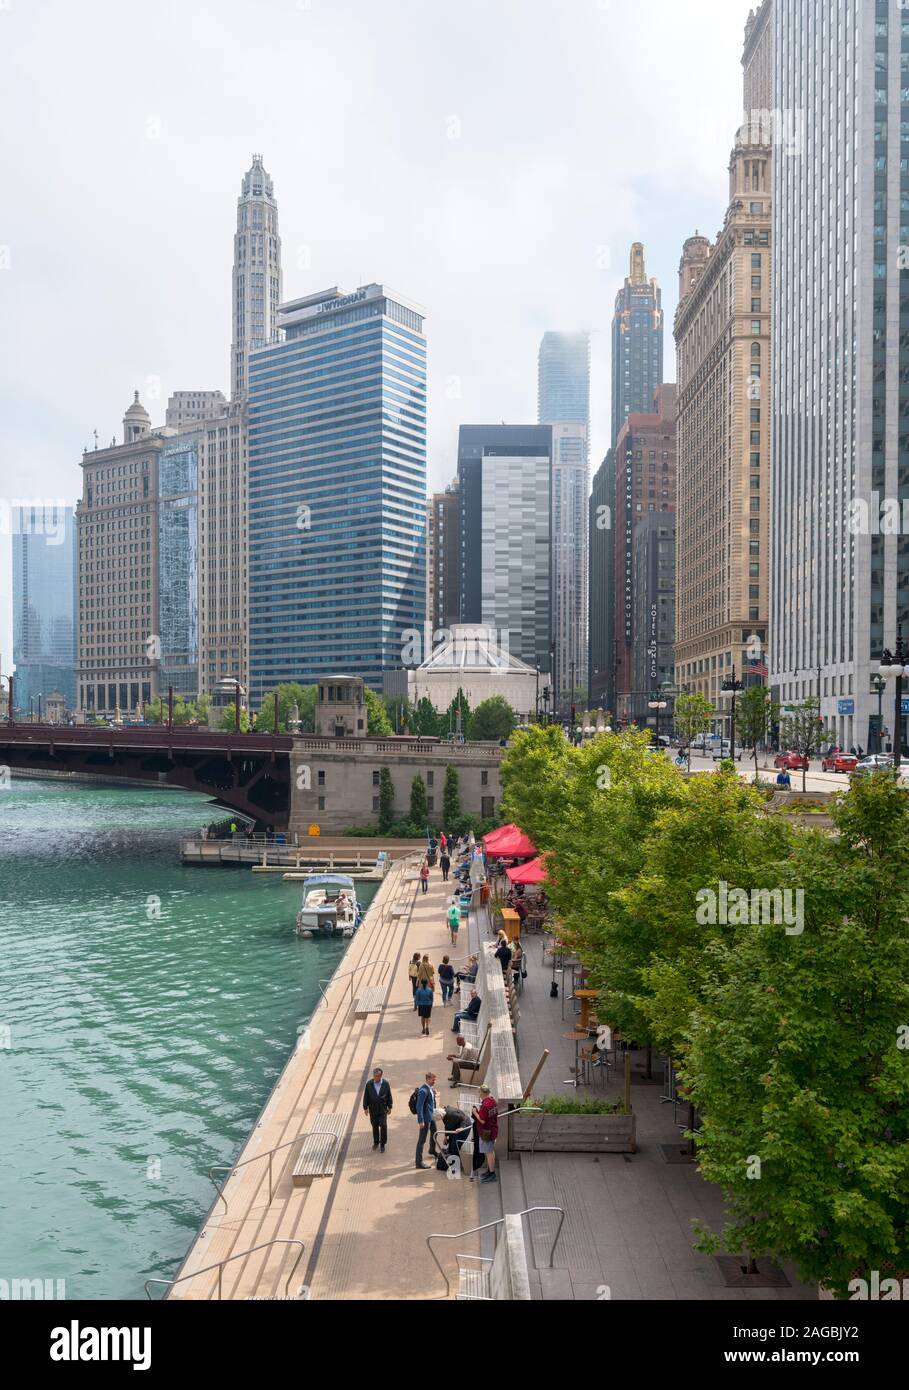 Chicago Riverwalk From Dearborn Street Bridge On The Chicago River